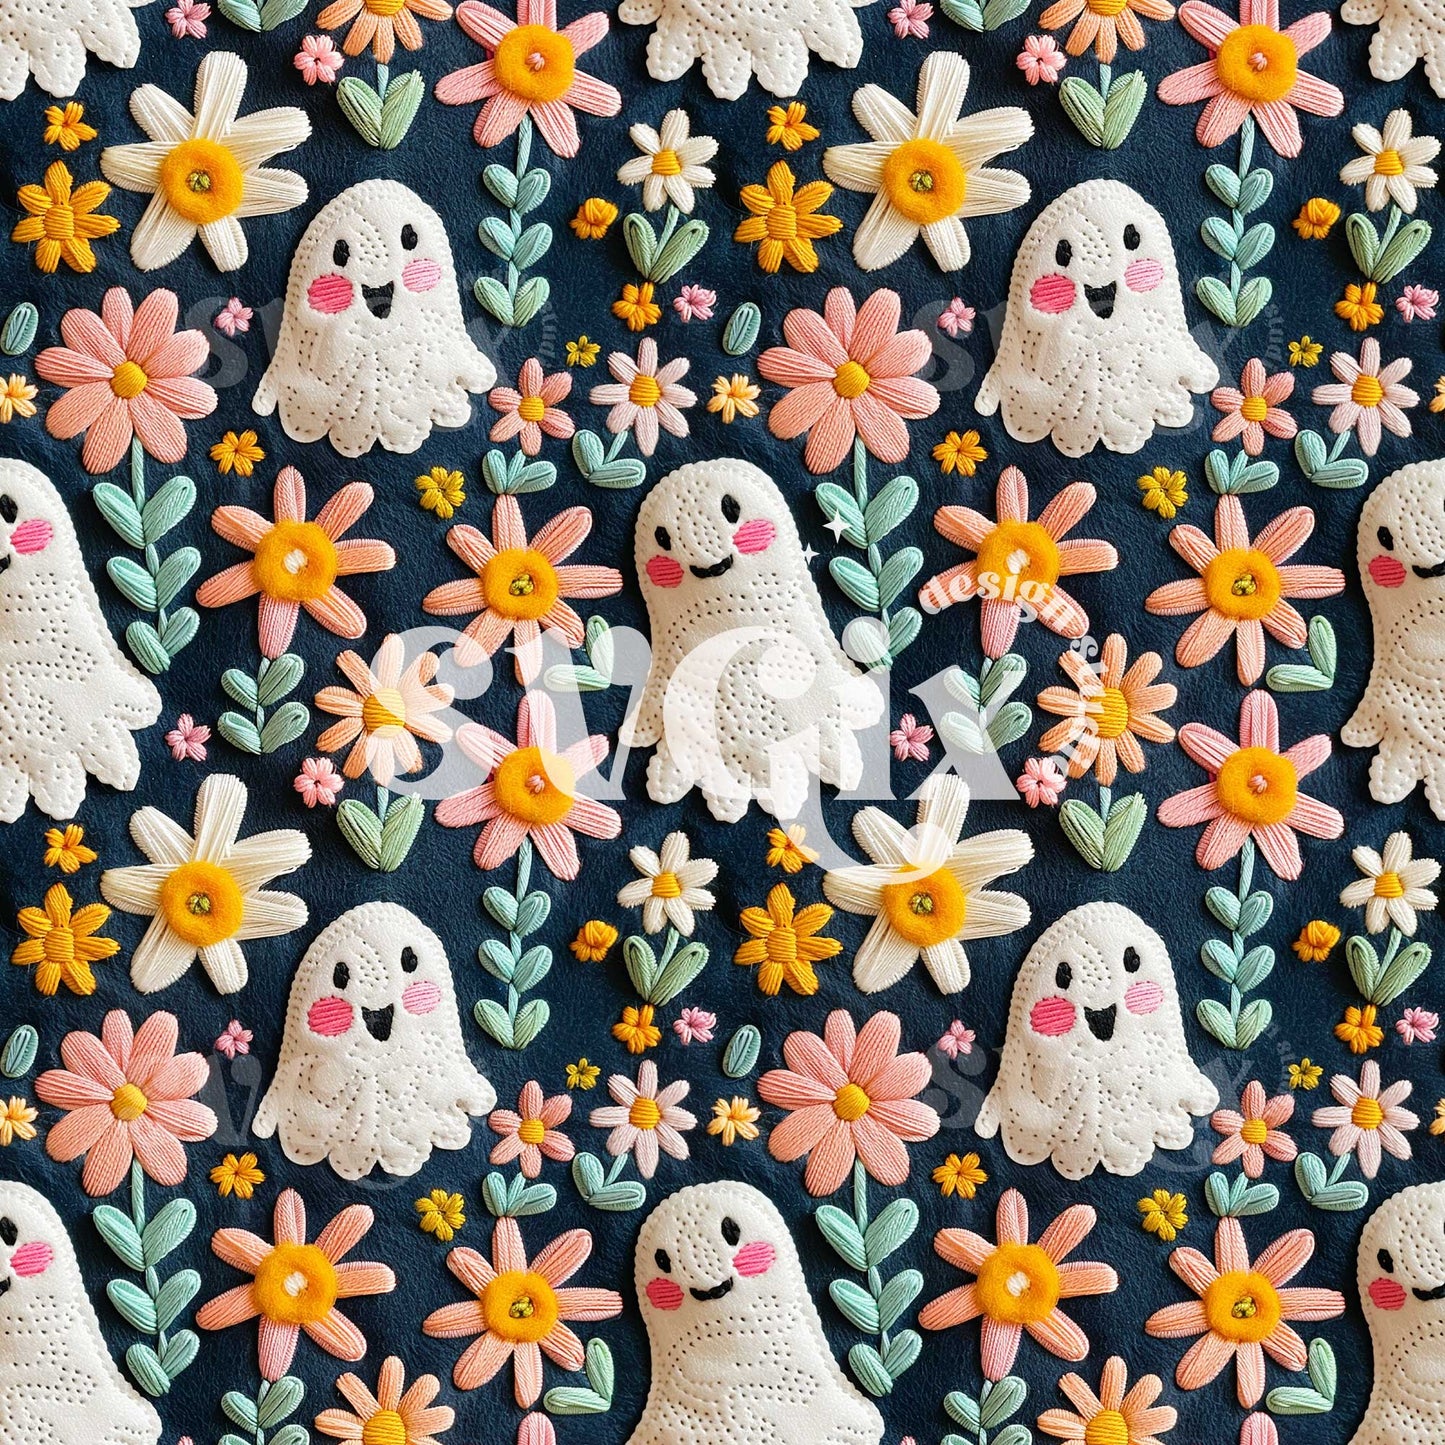 Boo-tiful Blossoms Halloween Seamless Pattern